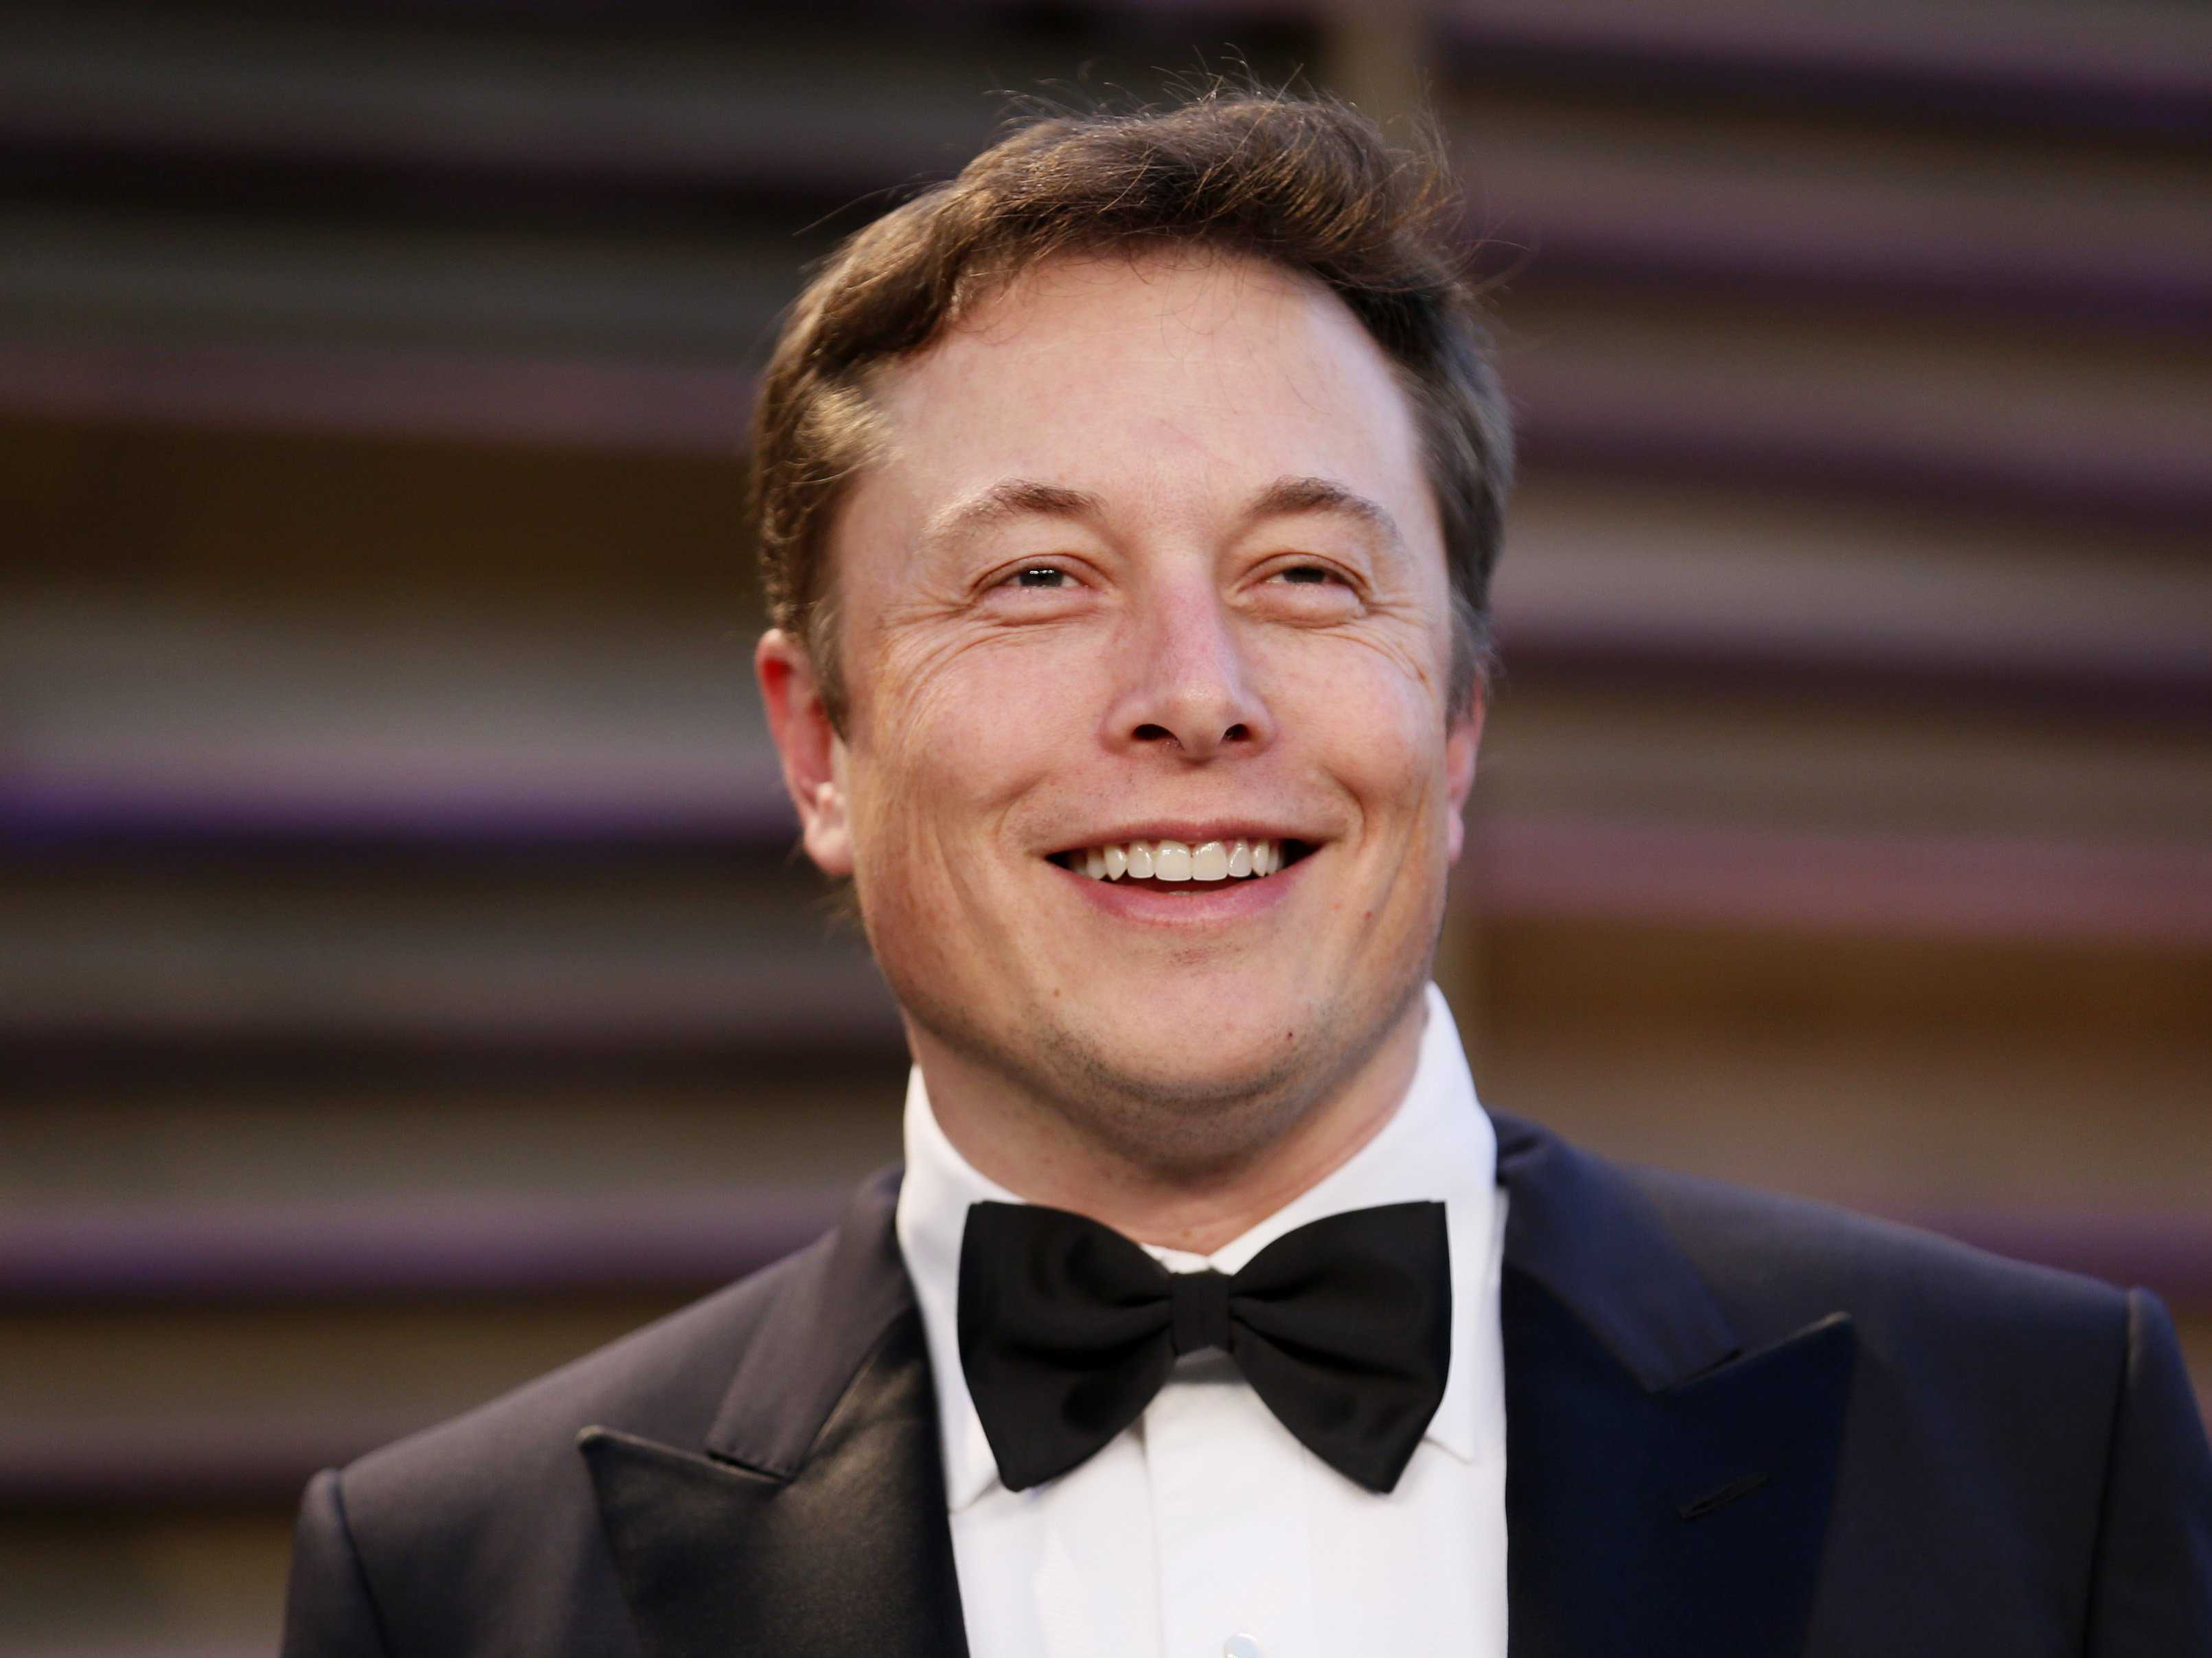 Empresario destacado: Elon Musk